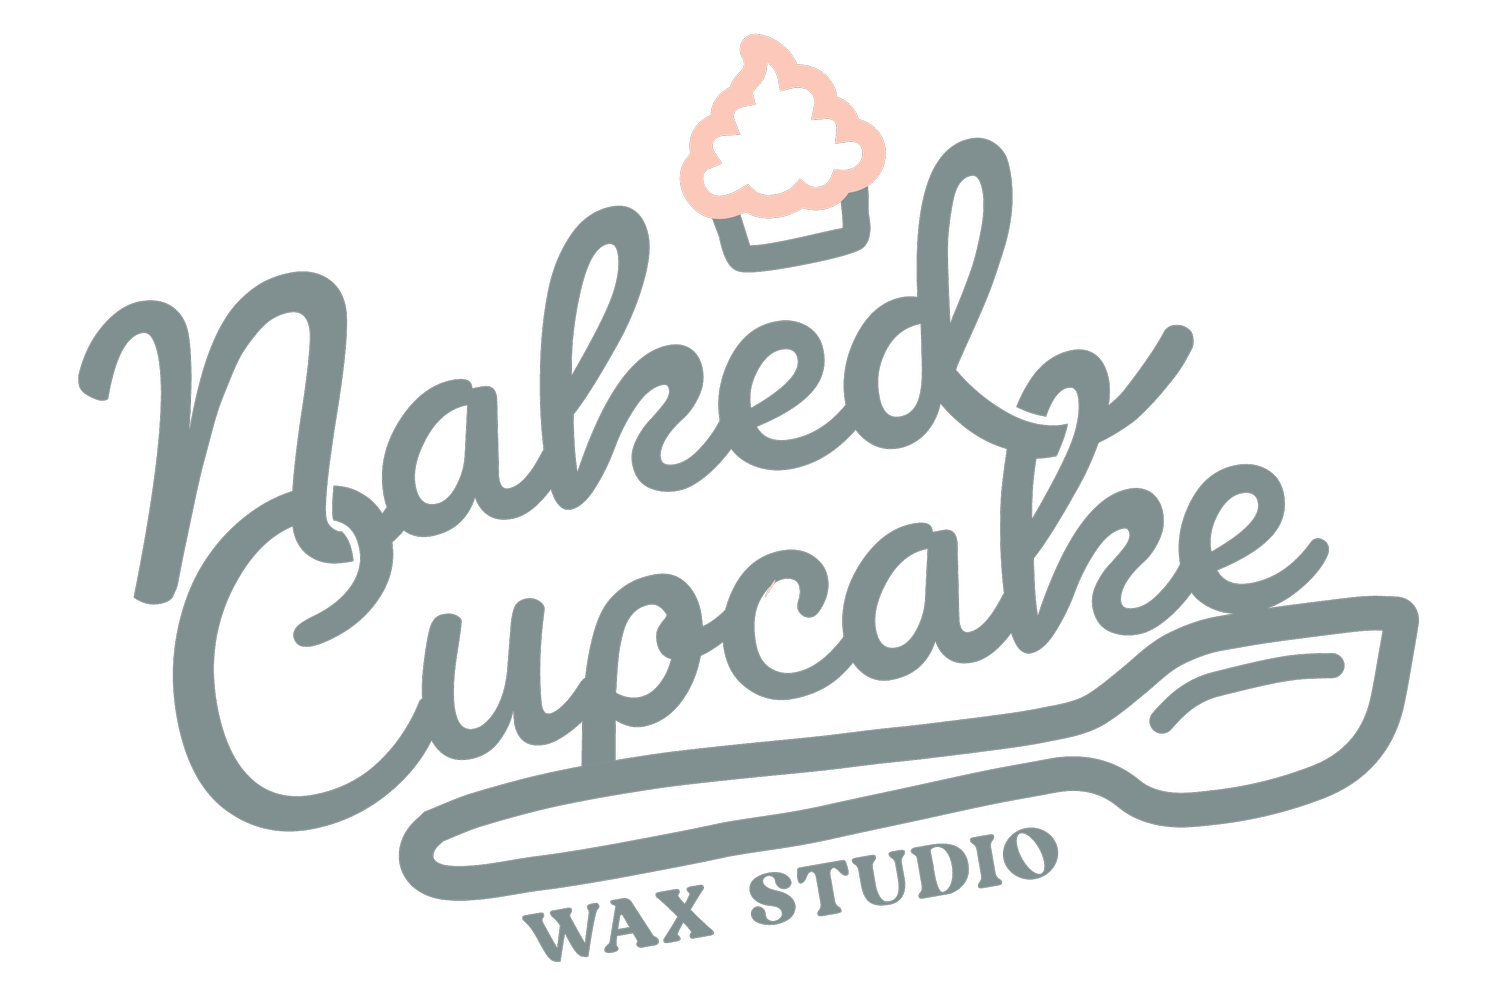 The Naked Cupcake Wax Studio